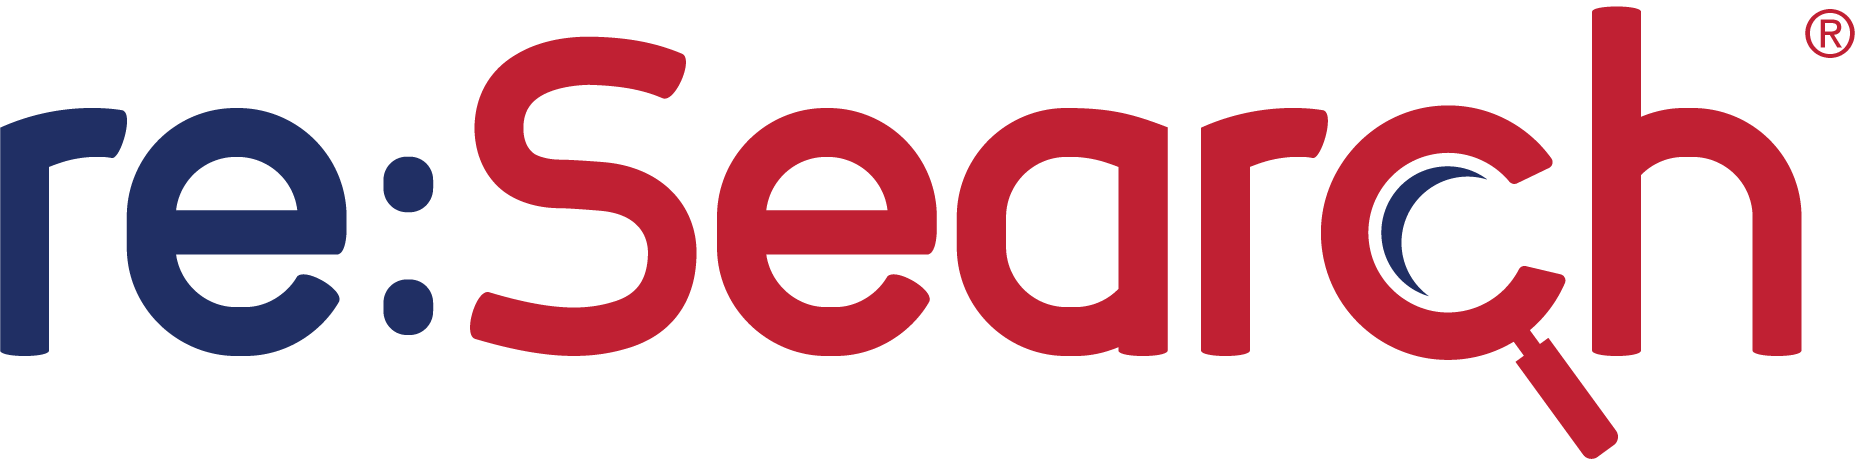 reSearch Header Logo